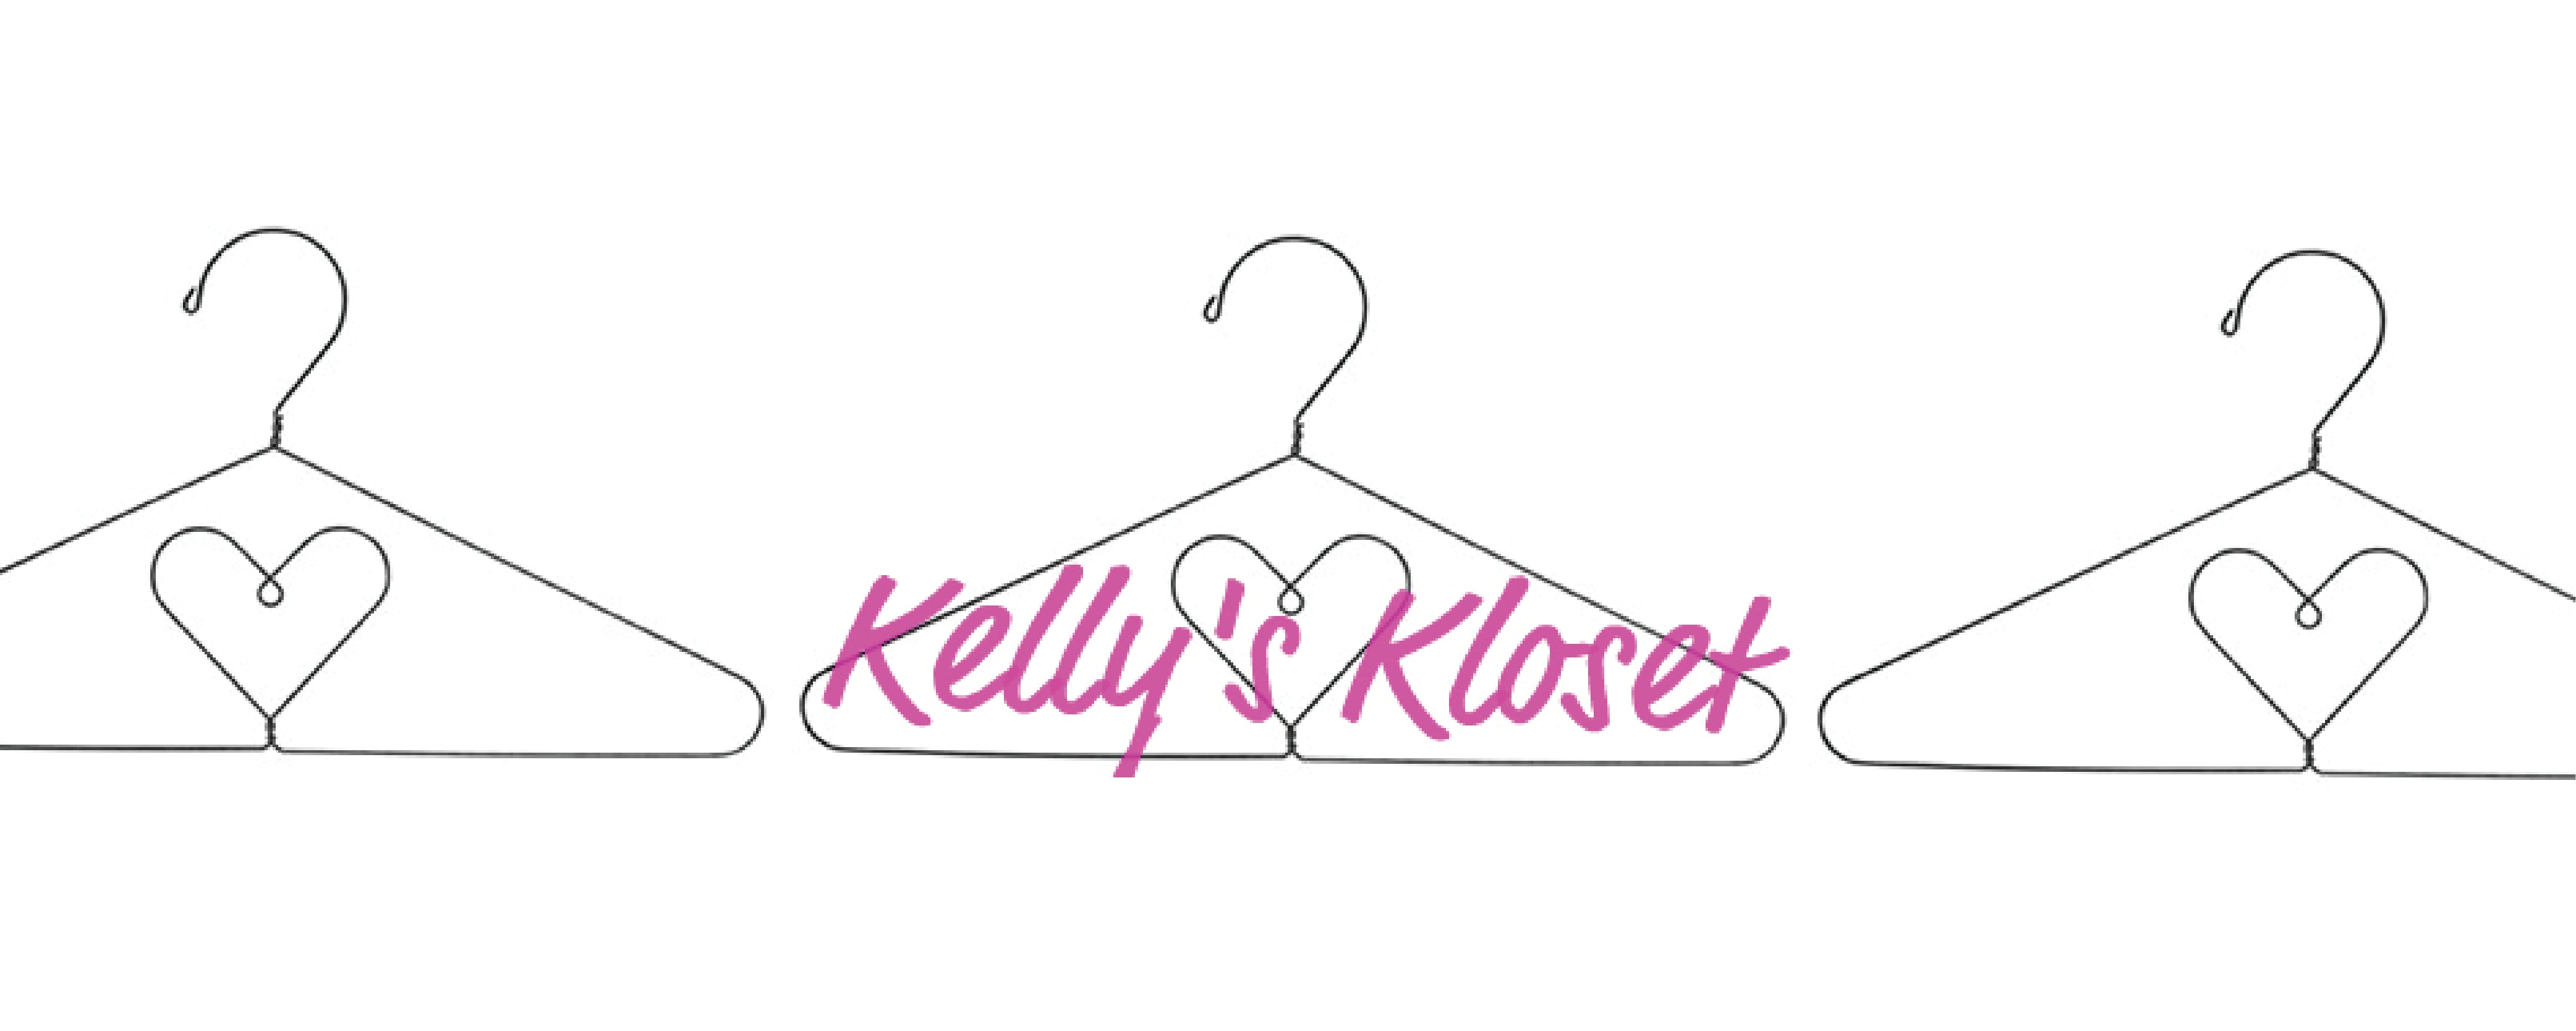 Kelly's Kloset - Closet Confessions